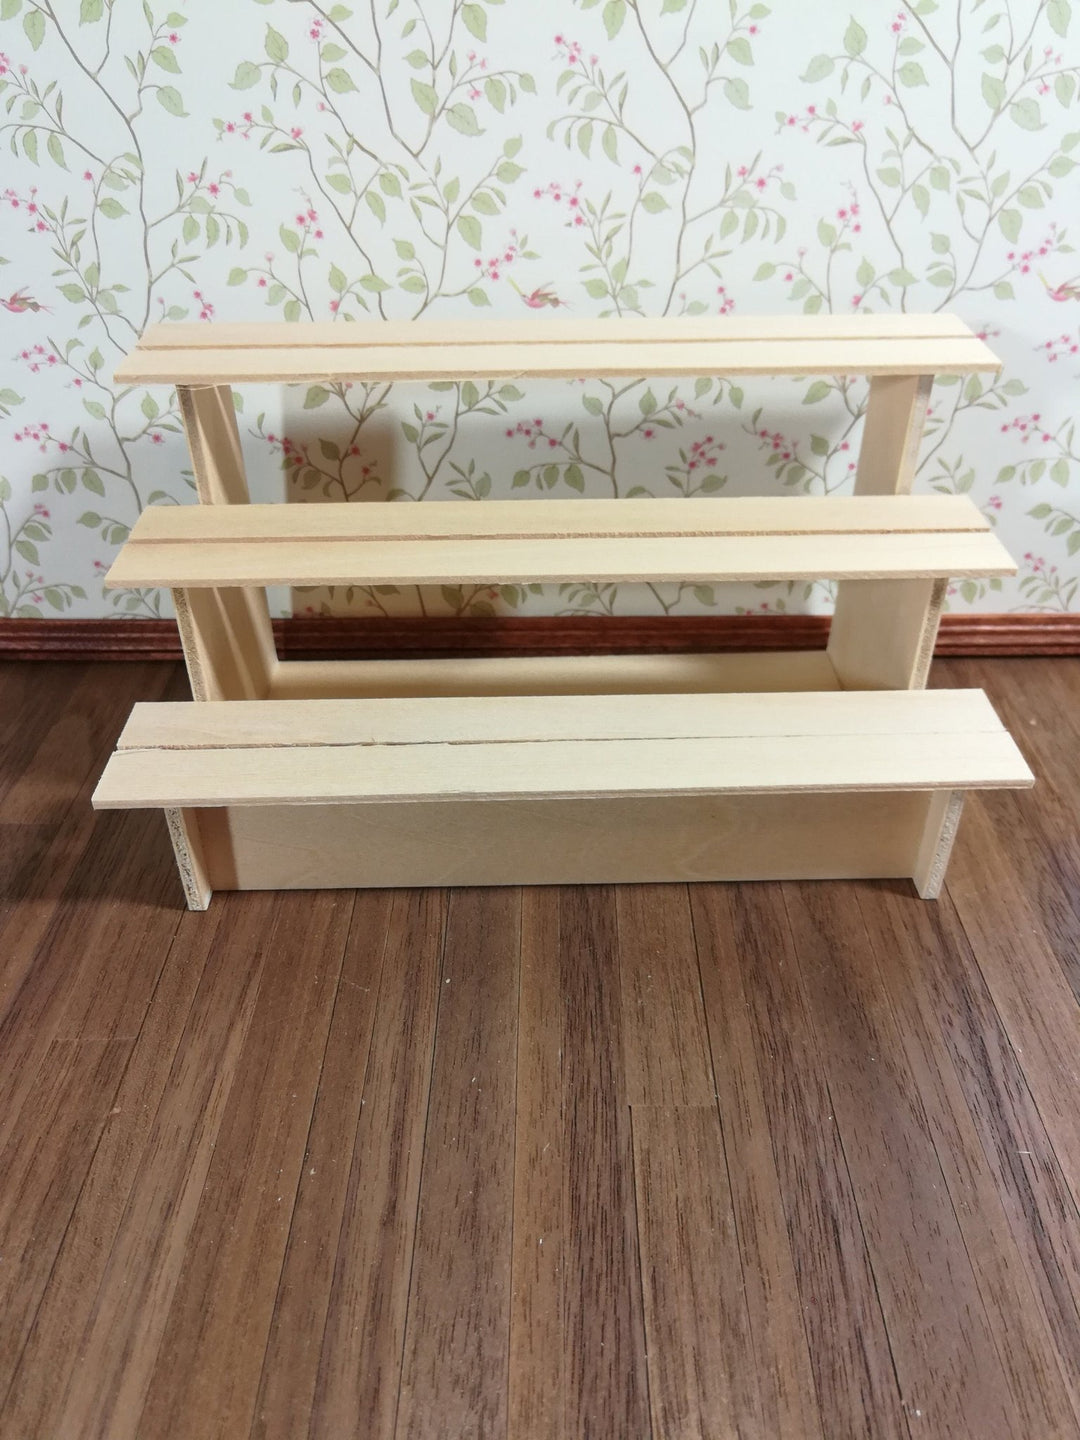 Dollhouse Shelves for Shop or Garden Unpainted Wood 1:12 Scale Miniature - Miniature Crush